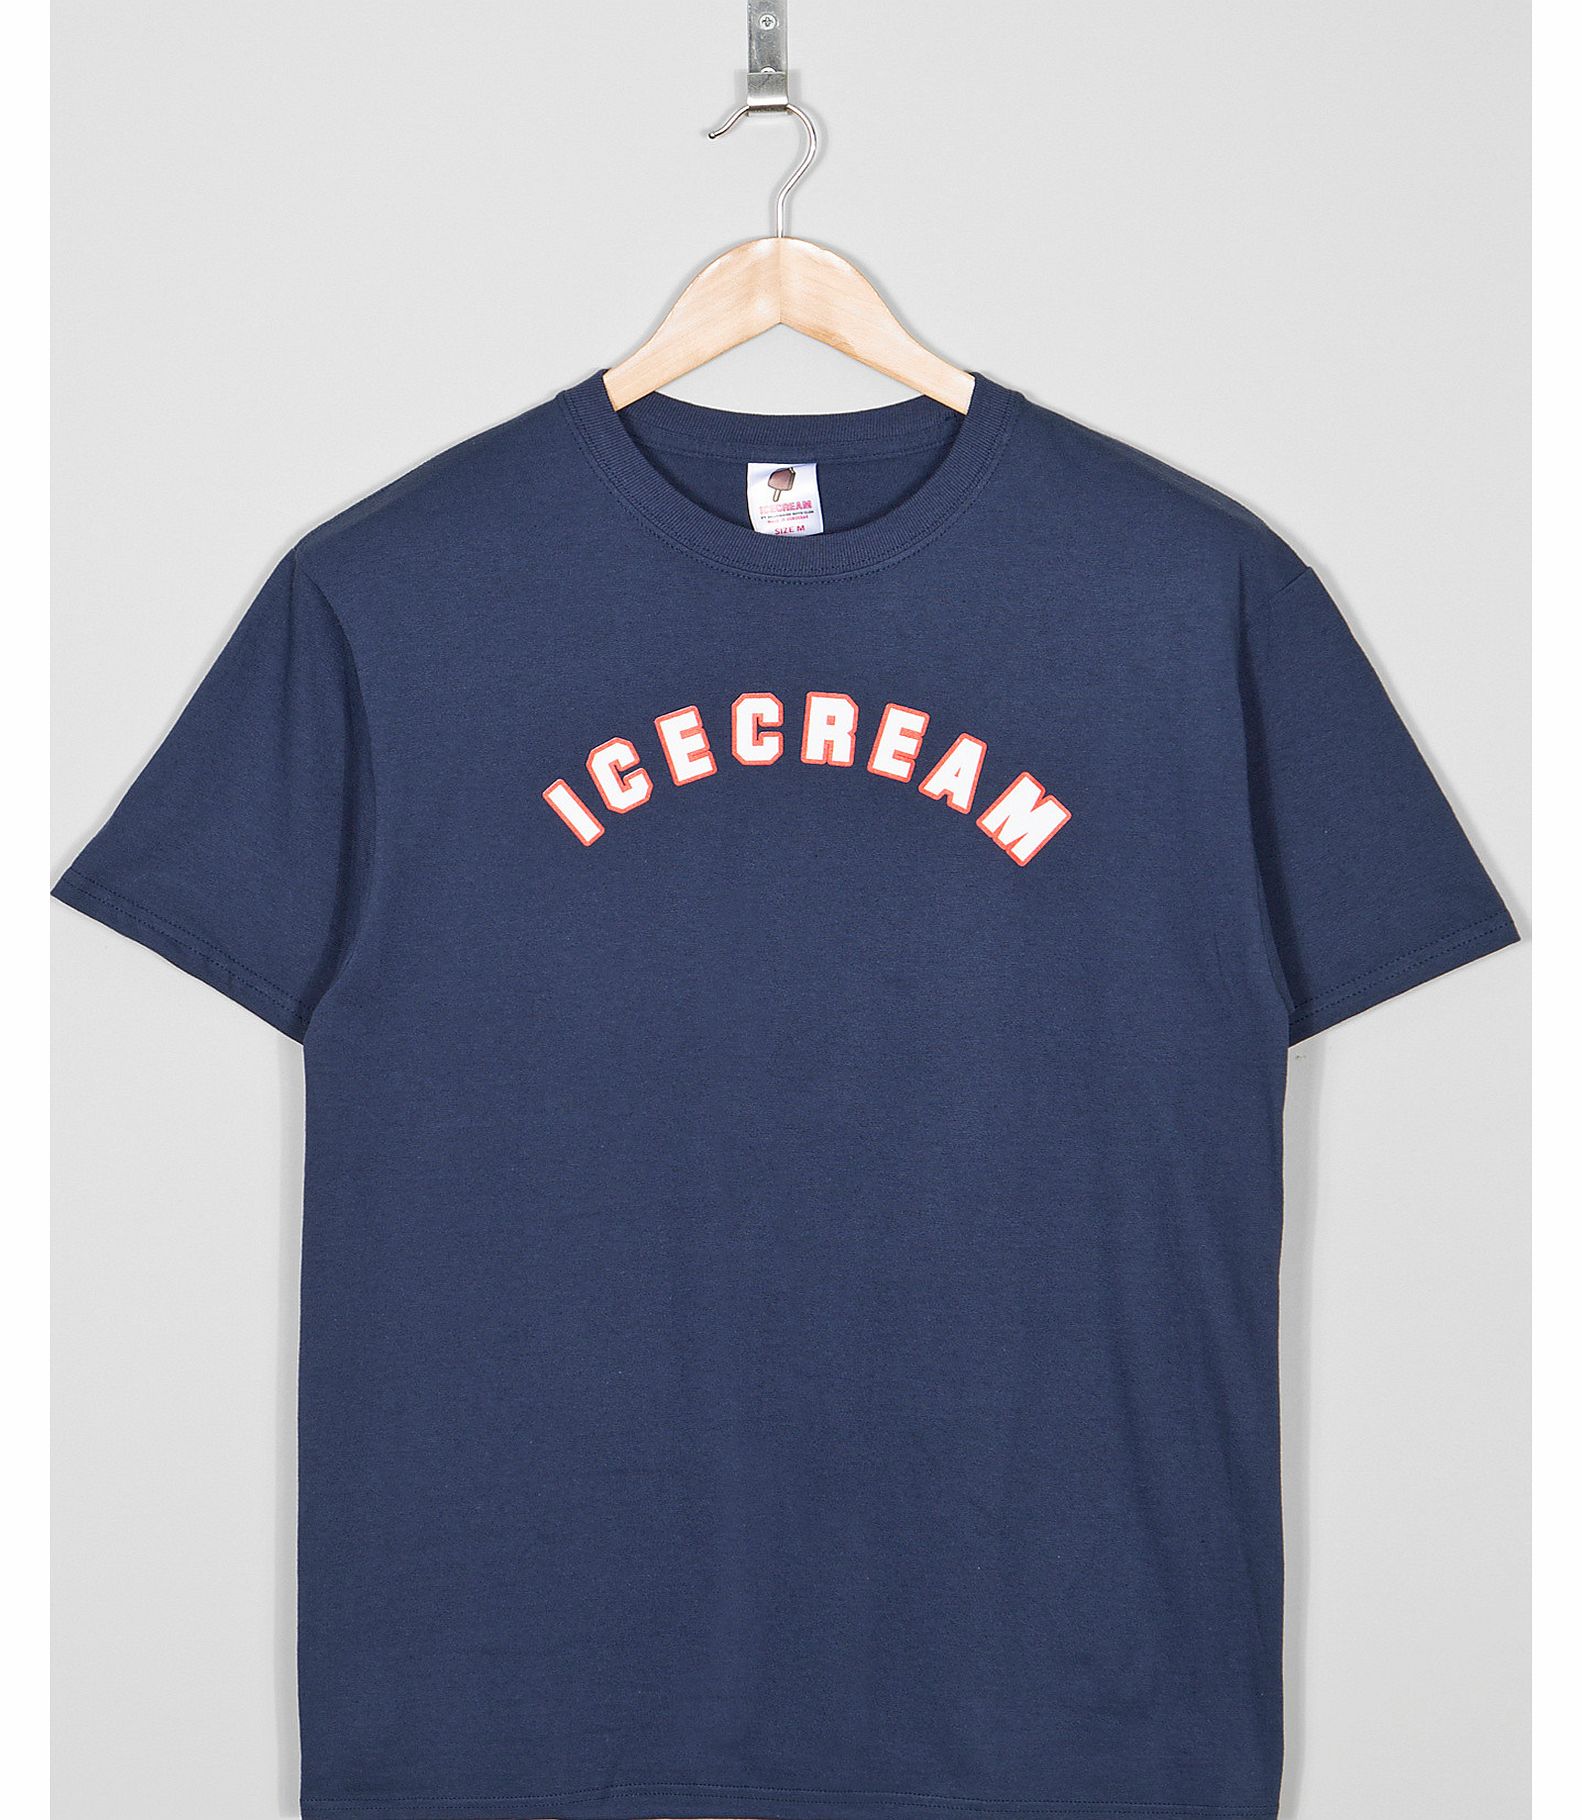 ICECREAM 17 T-Shirt